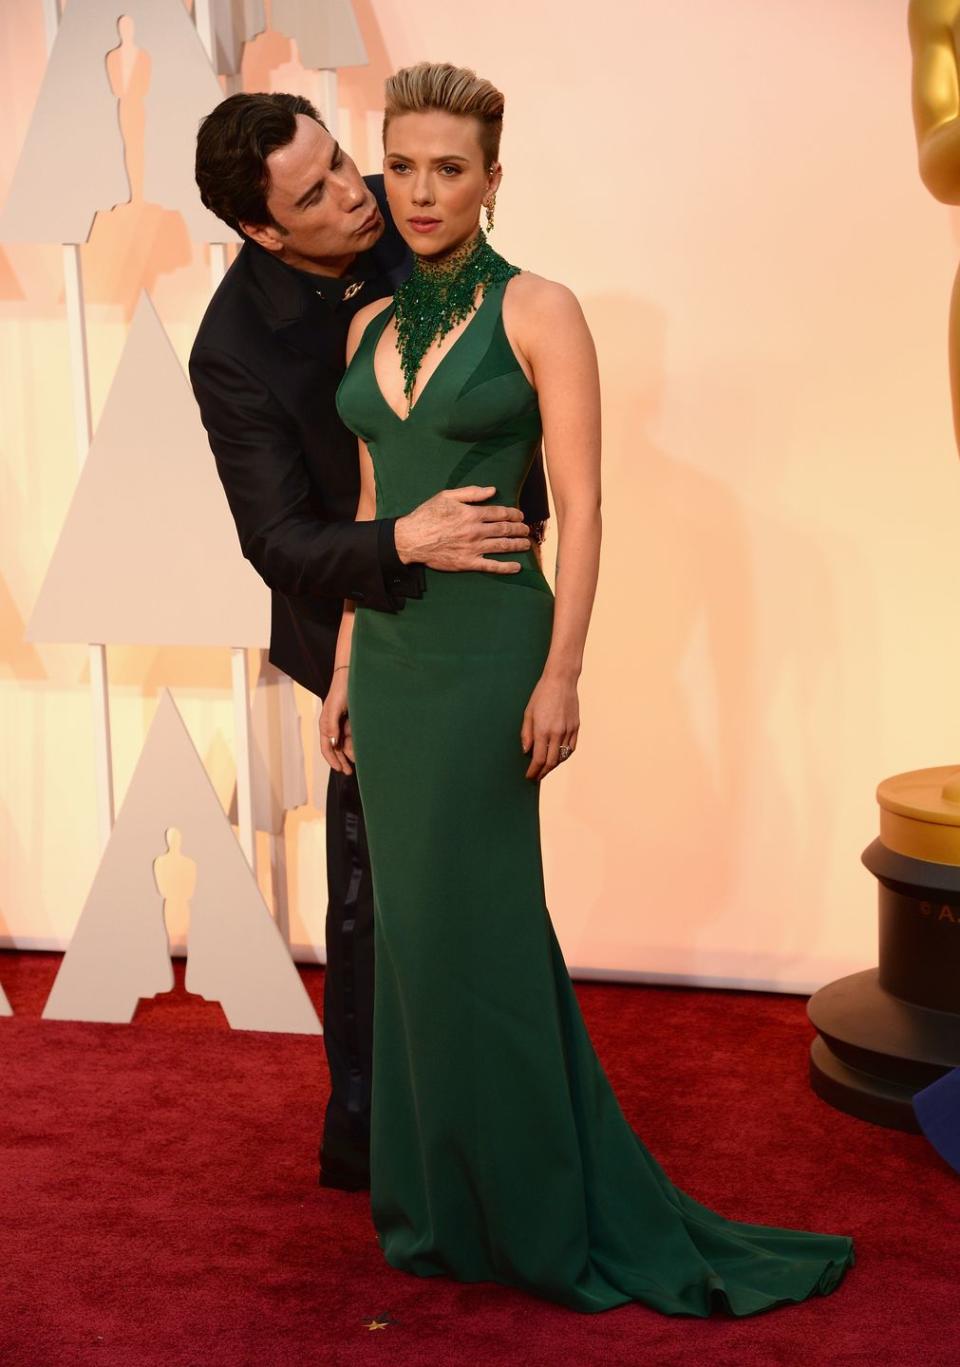 2014: When John Travolta was gross with Scarlett Johansson.